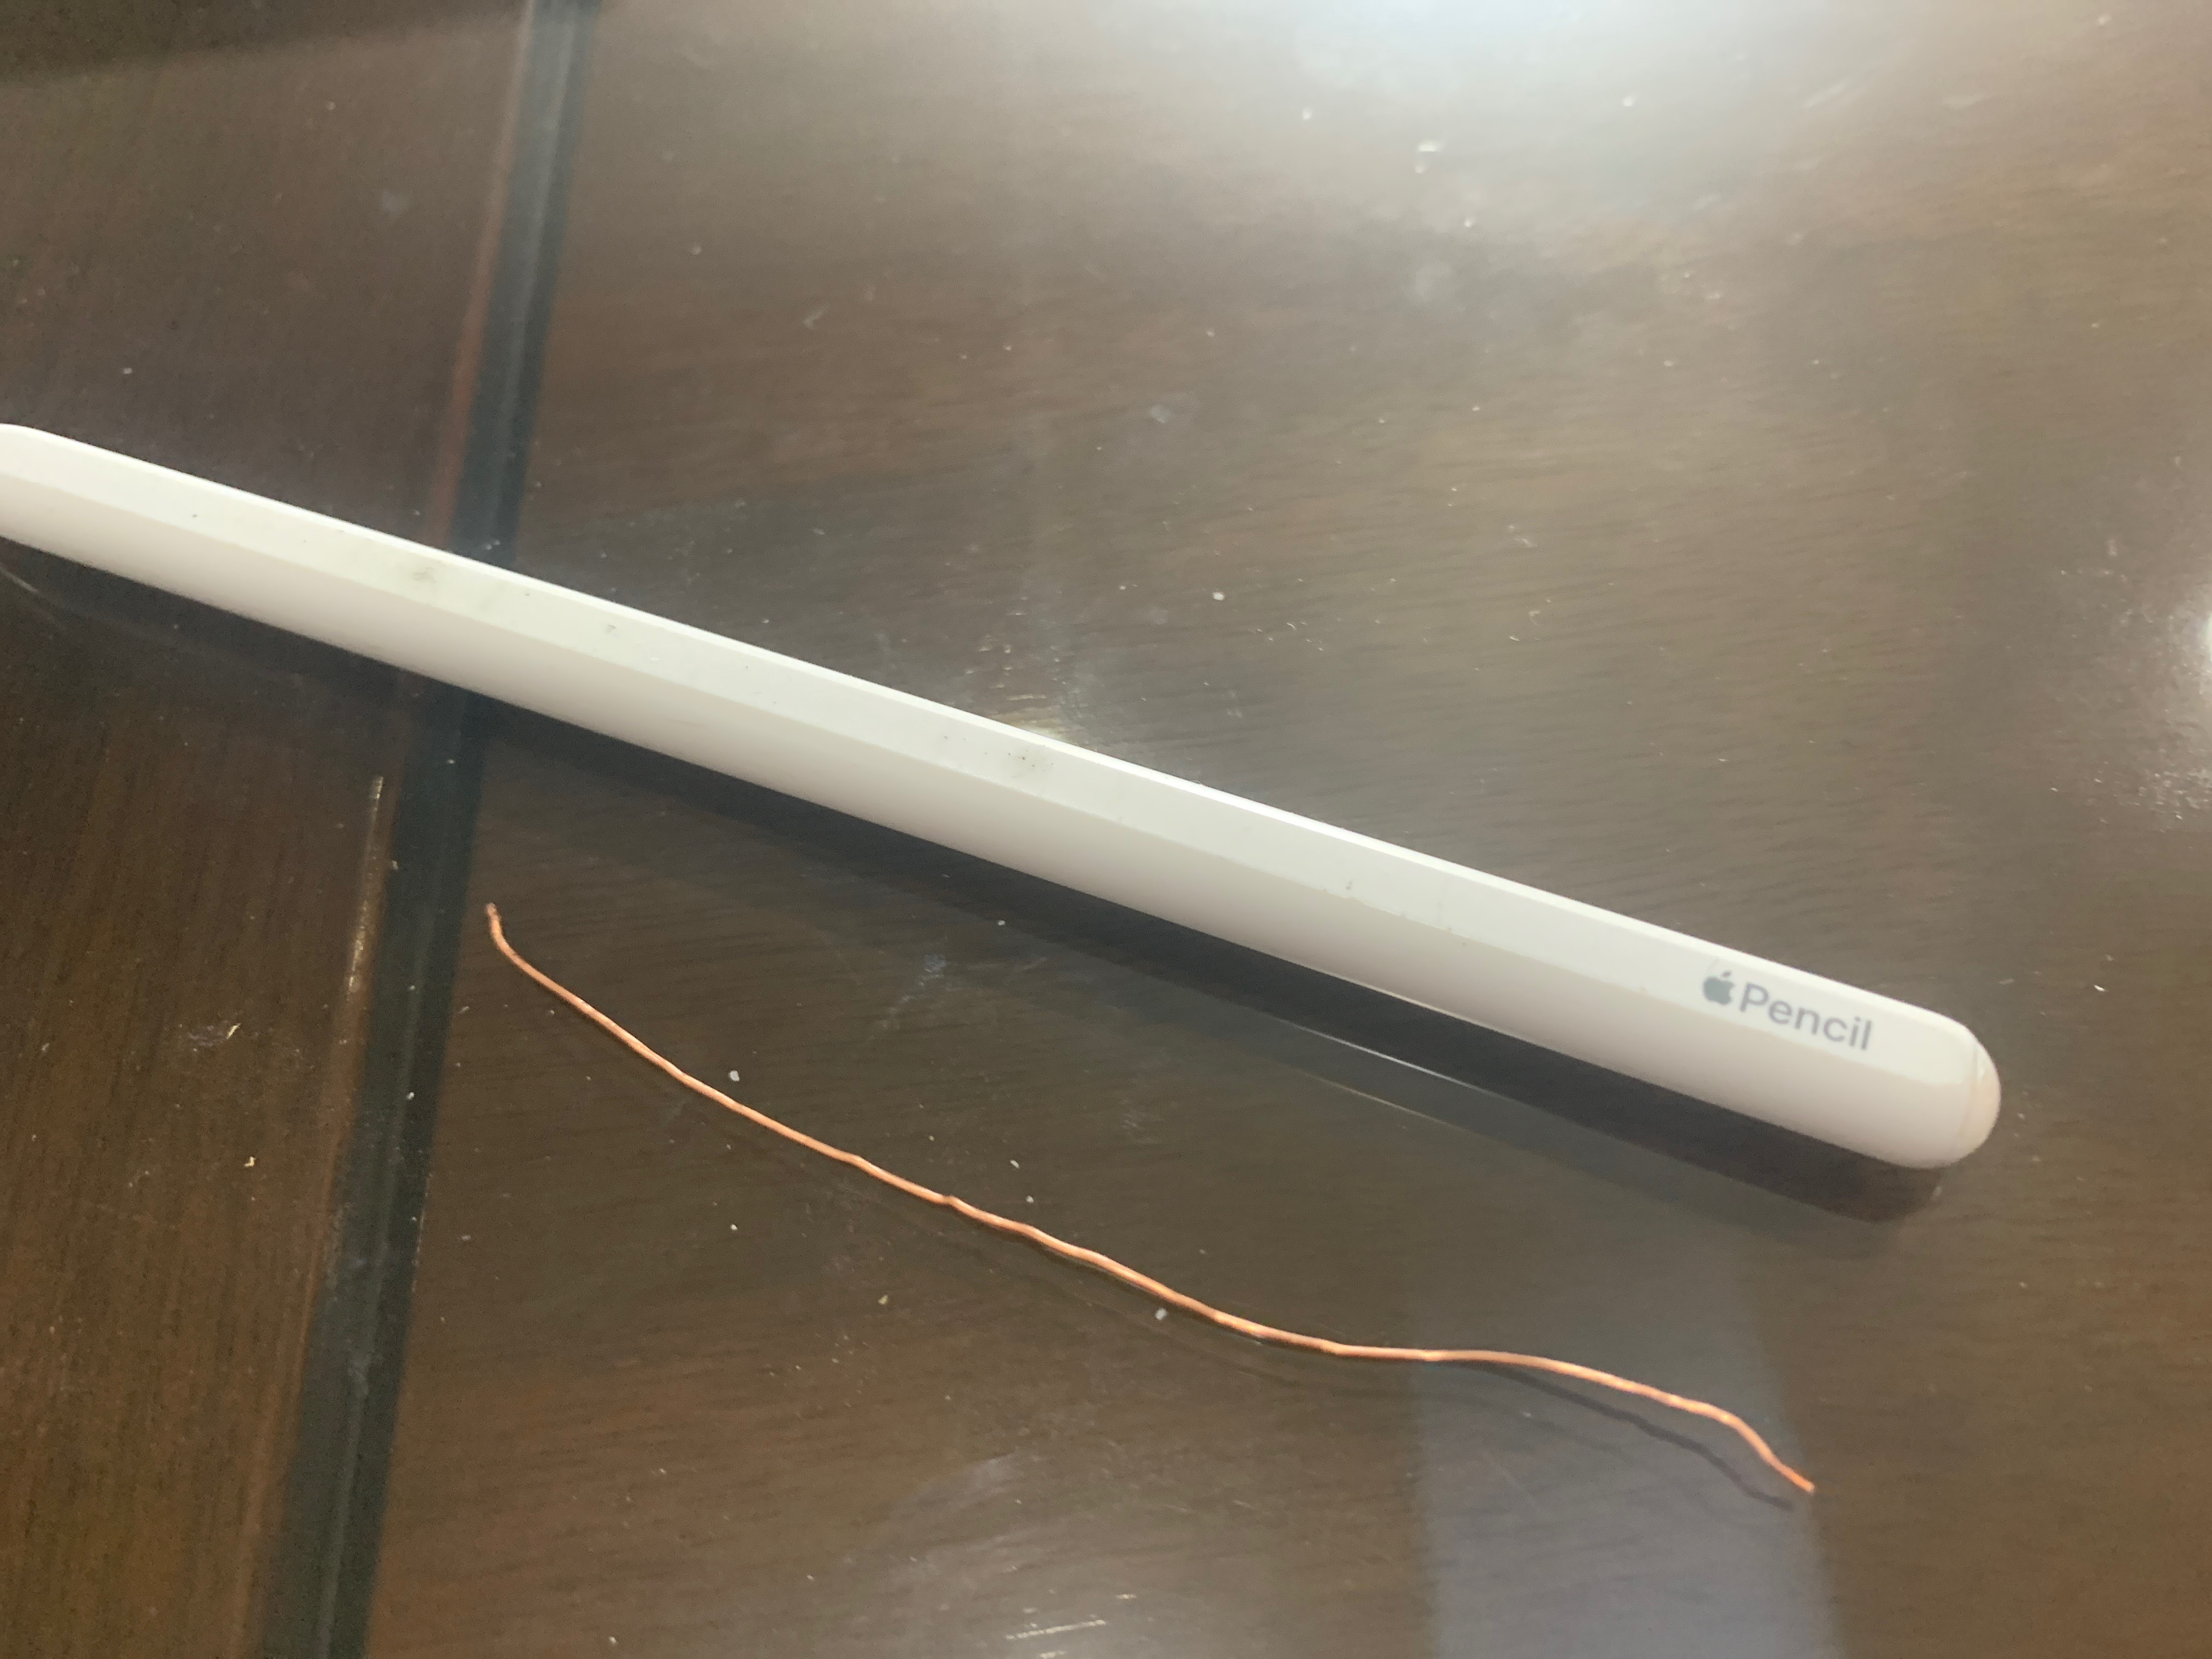 How do you revive a dead Apple Pencil 2?